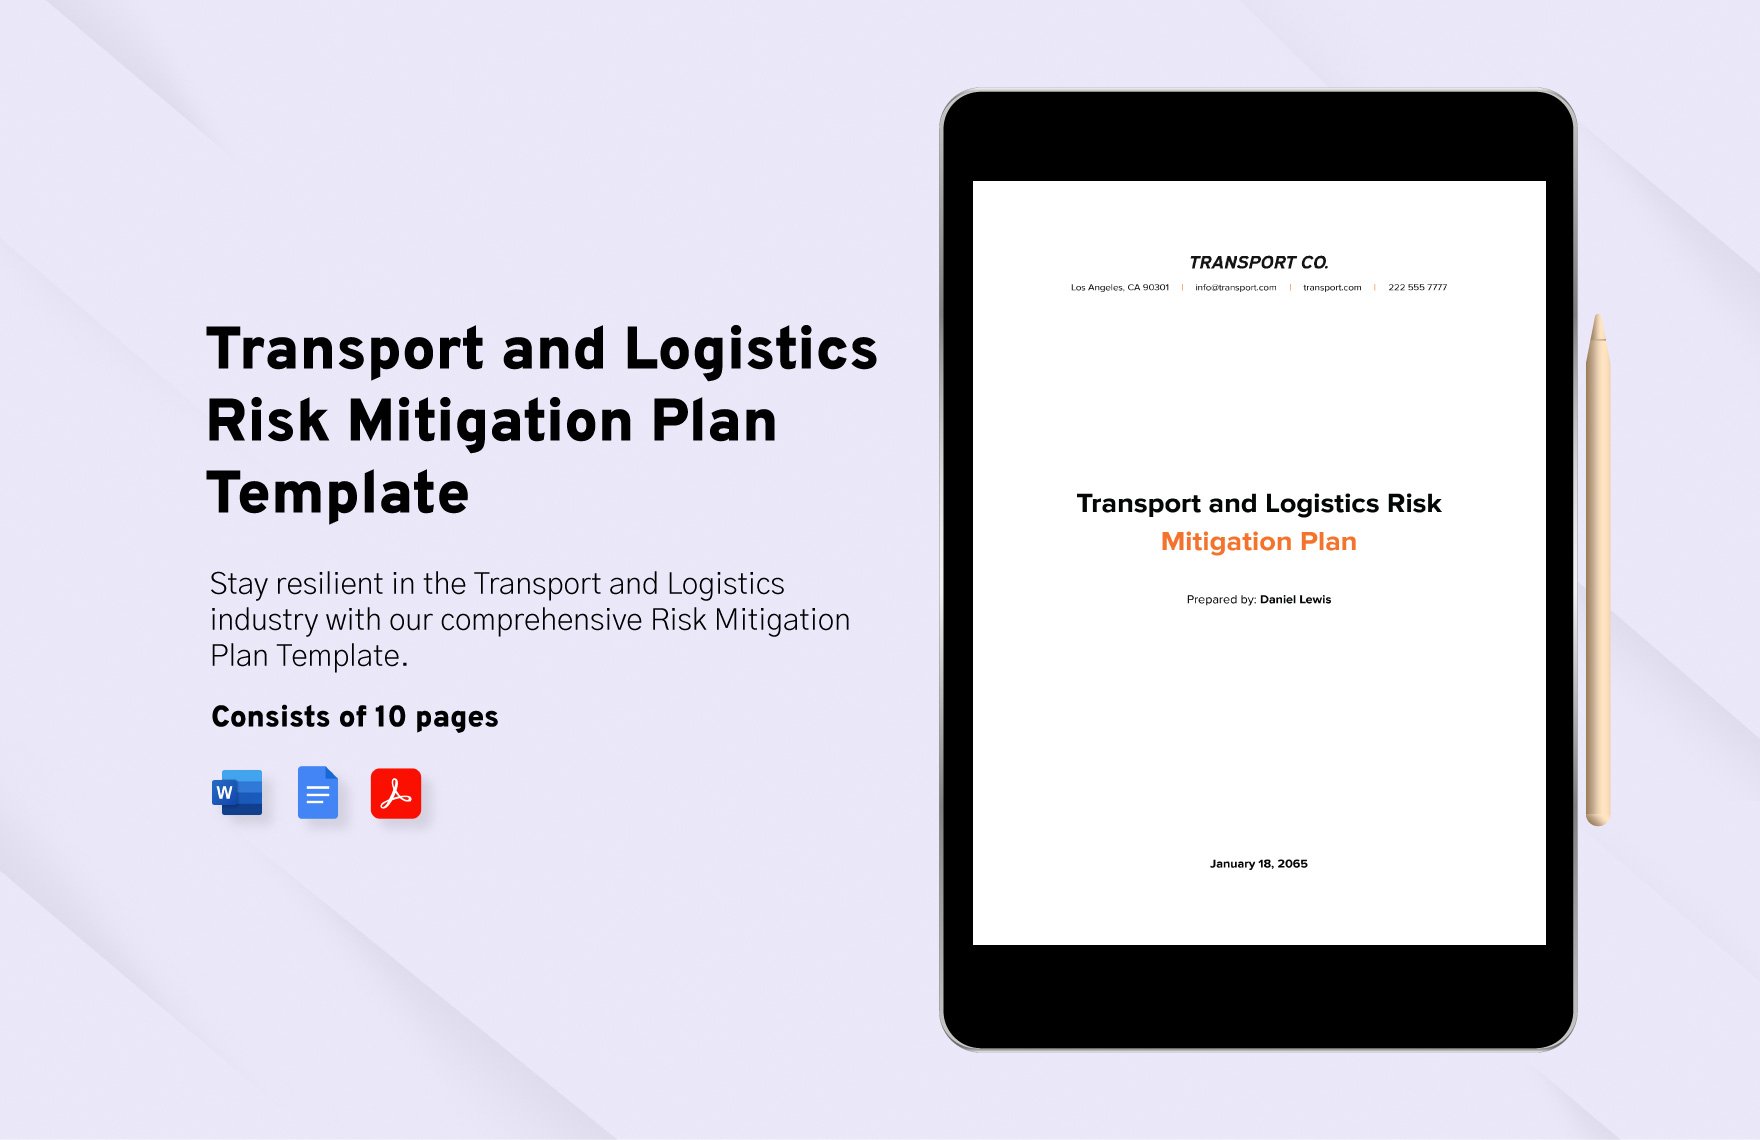 Transport and Logistics Risk Mitigation Plan Template